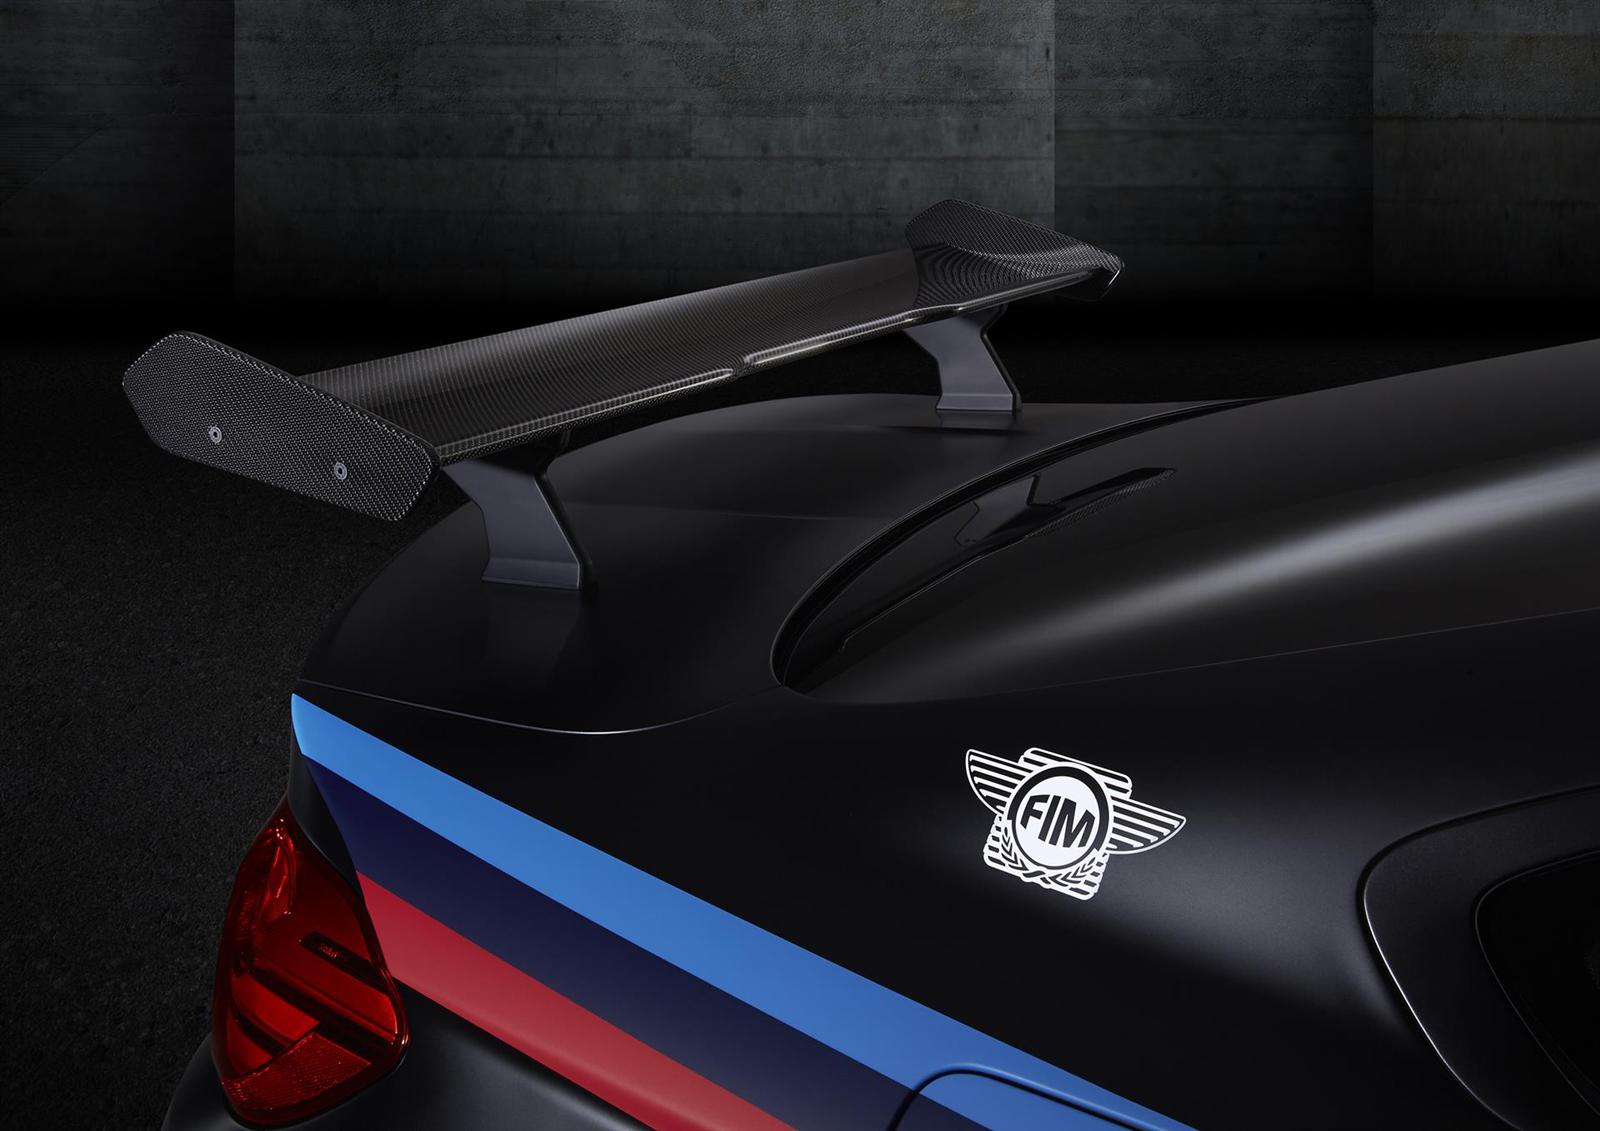 2015 BMW M4 Coupe MotoGP Safety Car